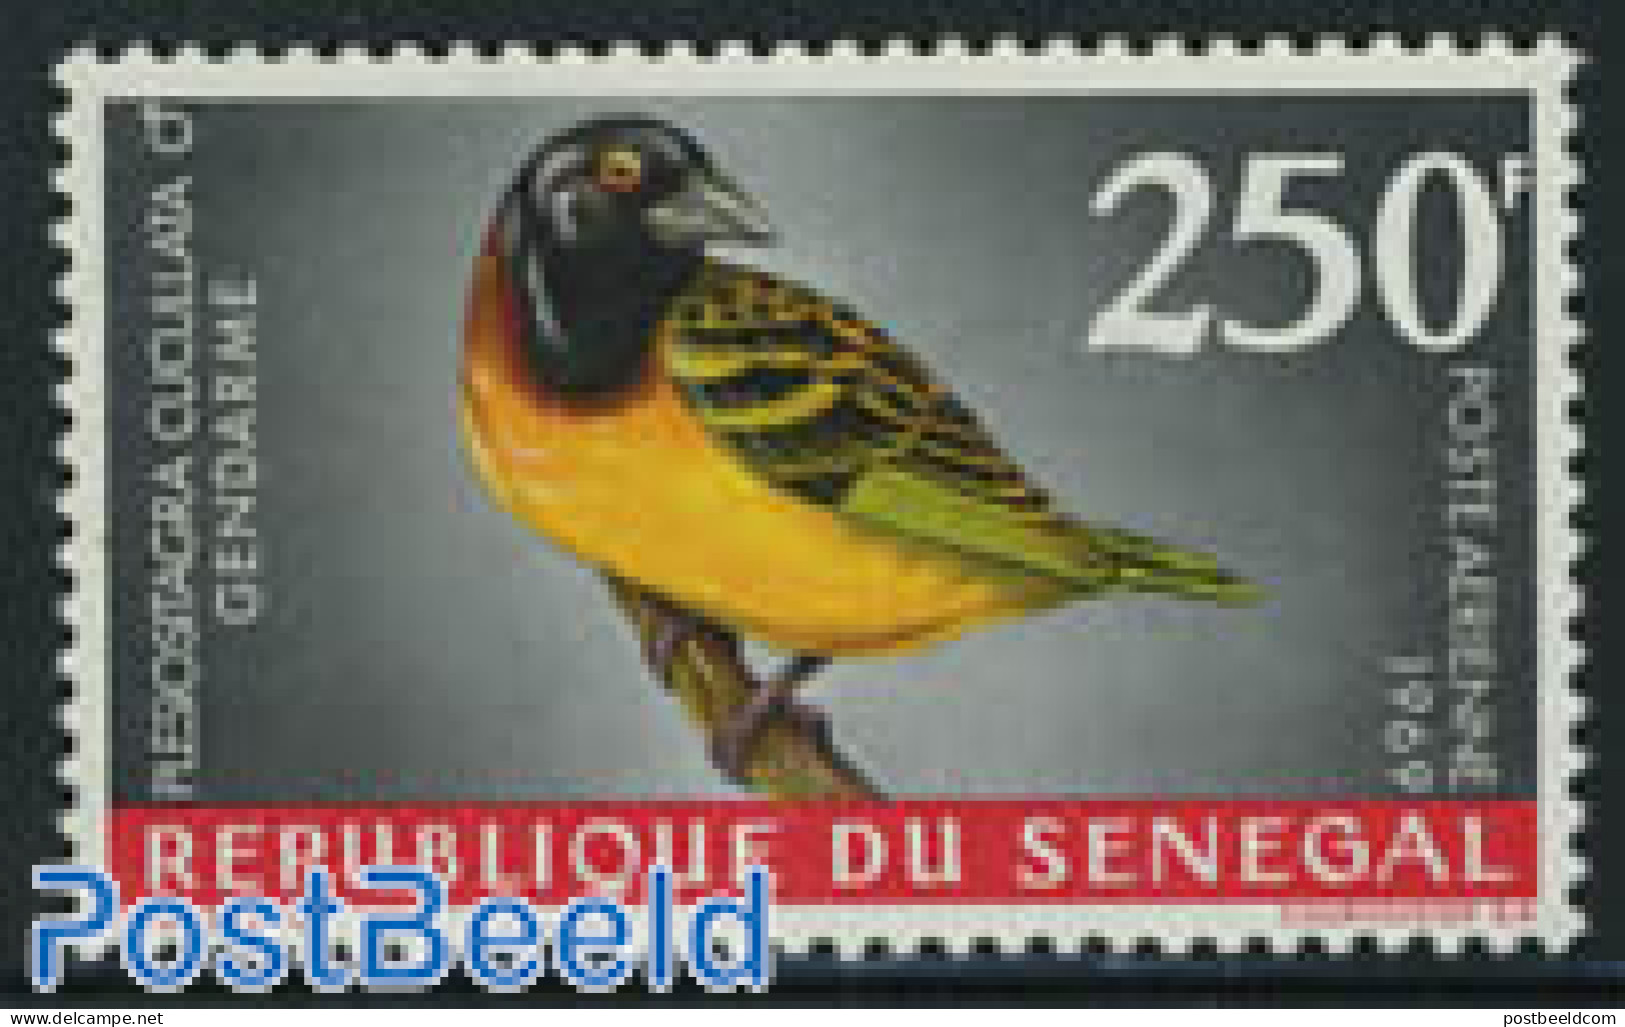 Senegal 1968 250F, Stamp Out Of Set, Mint NH, Nature - Birds - Senegal (1960-...)